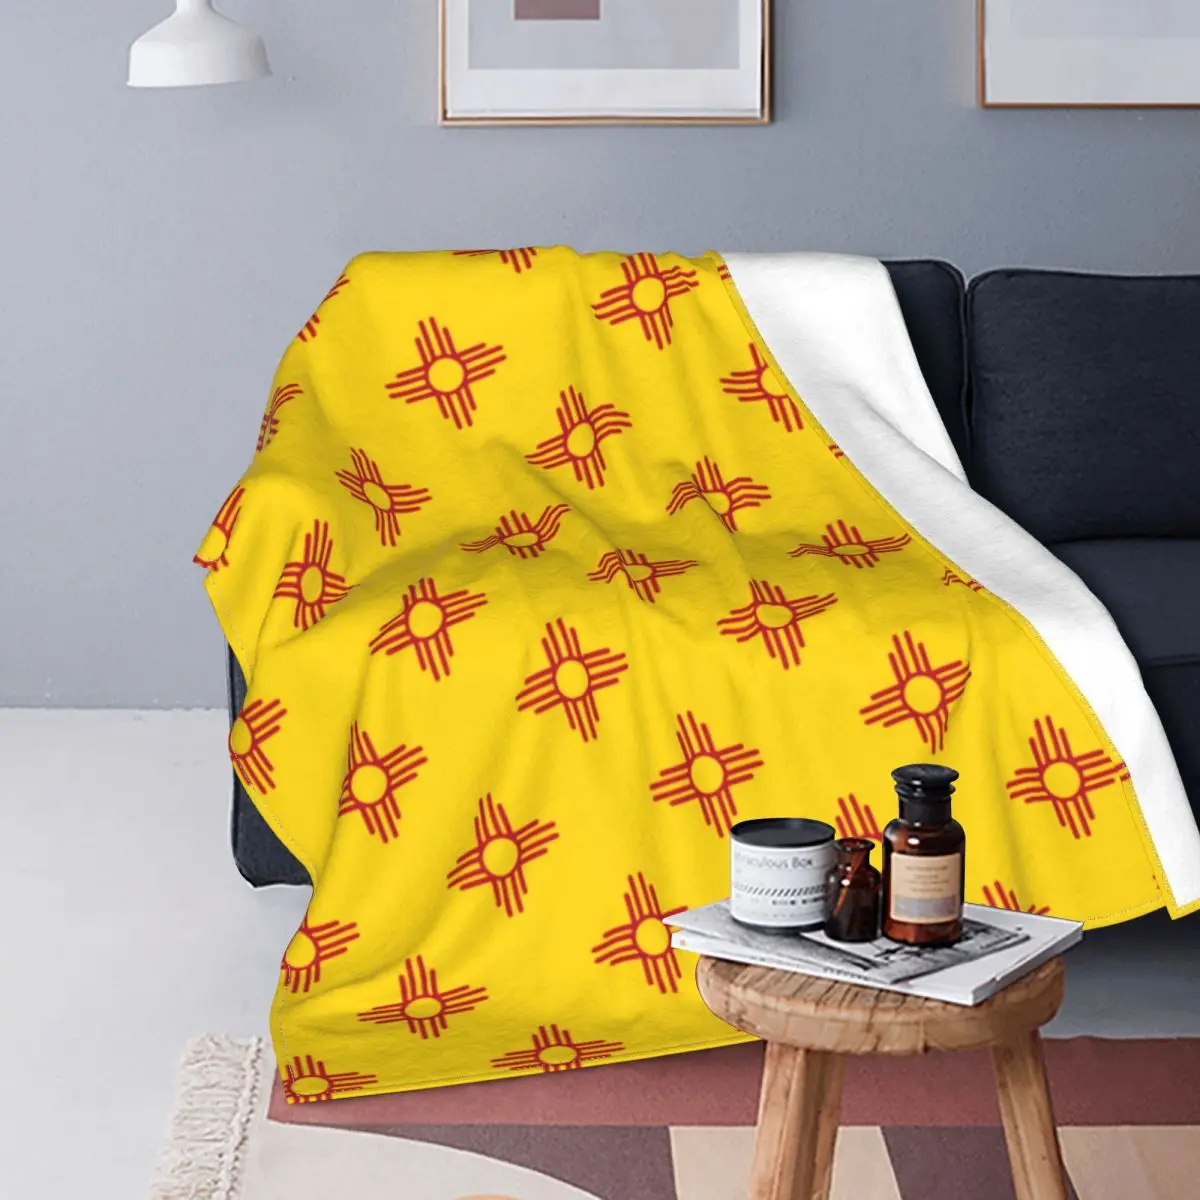 

Одеяло Zia с символами солнца, супер мягкое одеяло с флагом штата Мексики, дешевое покрывало